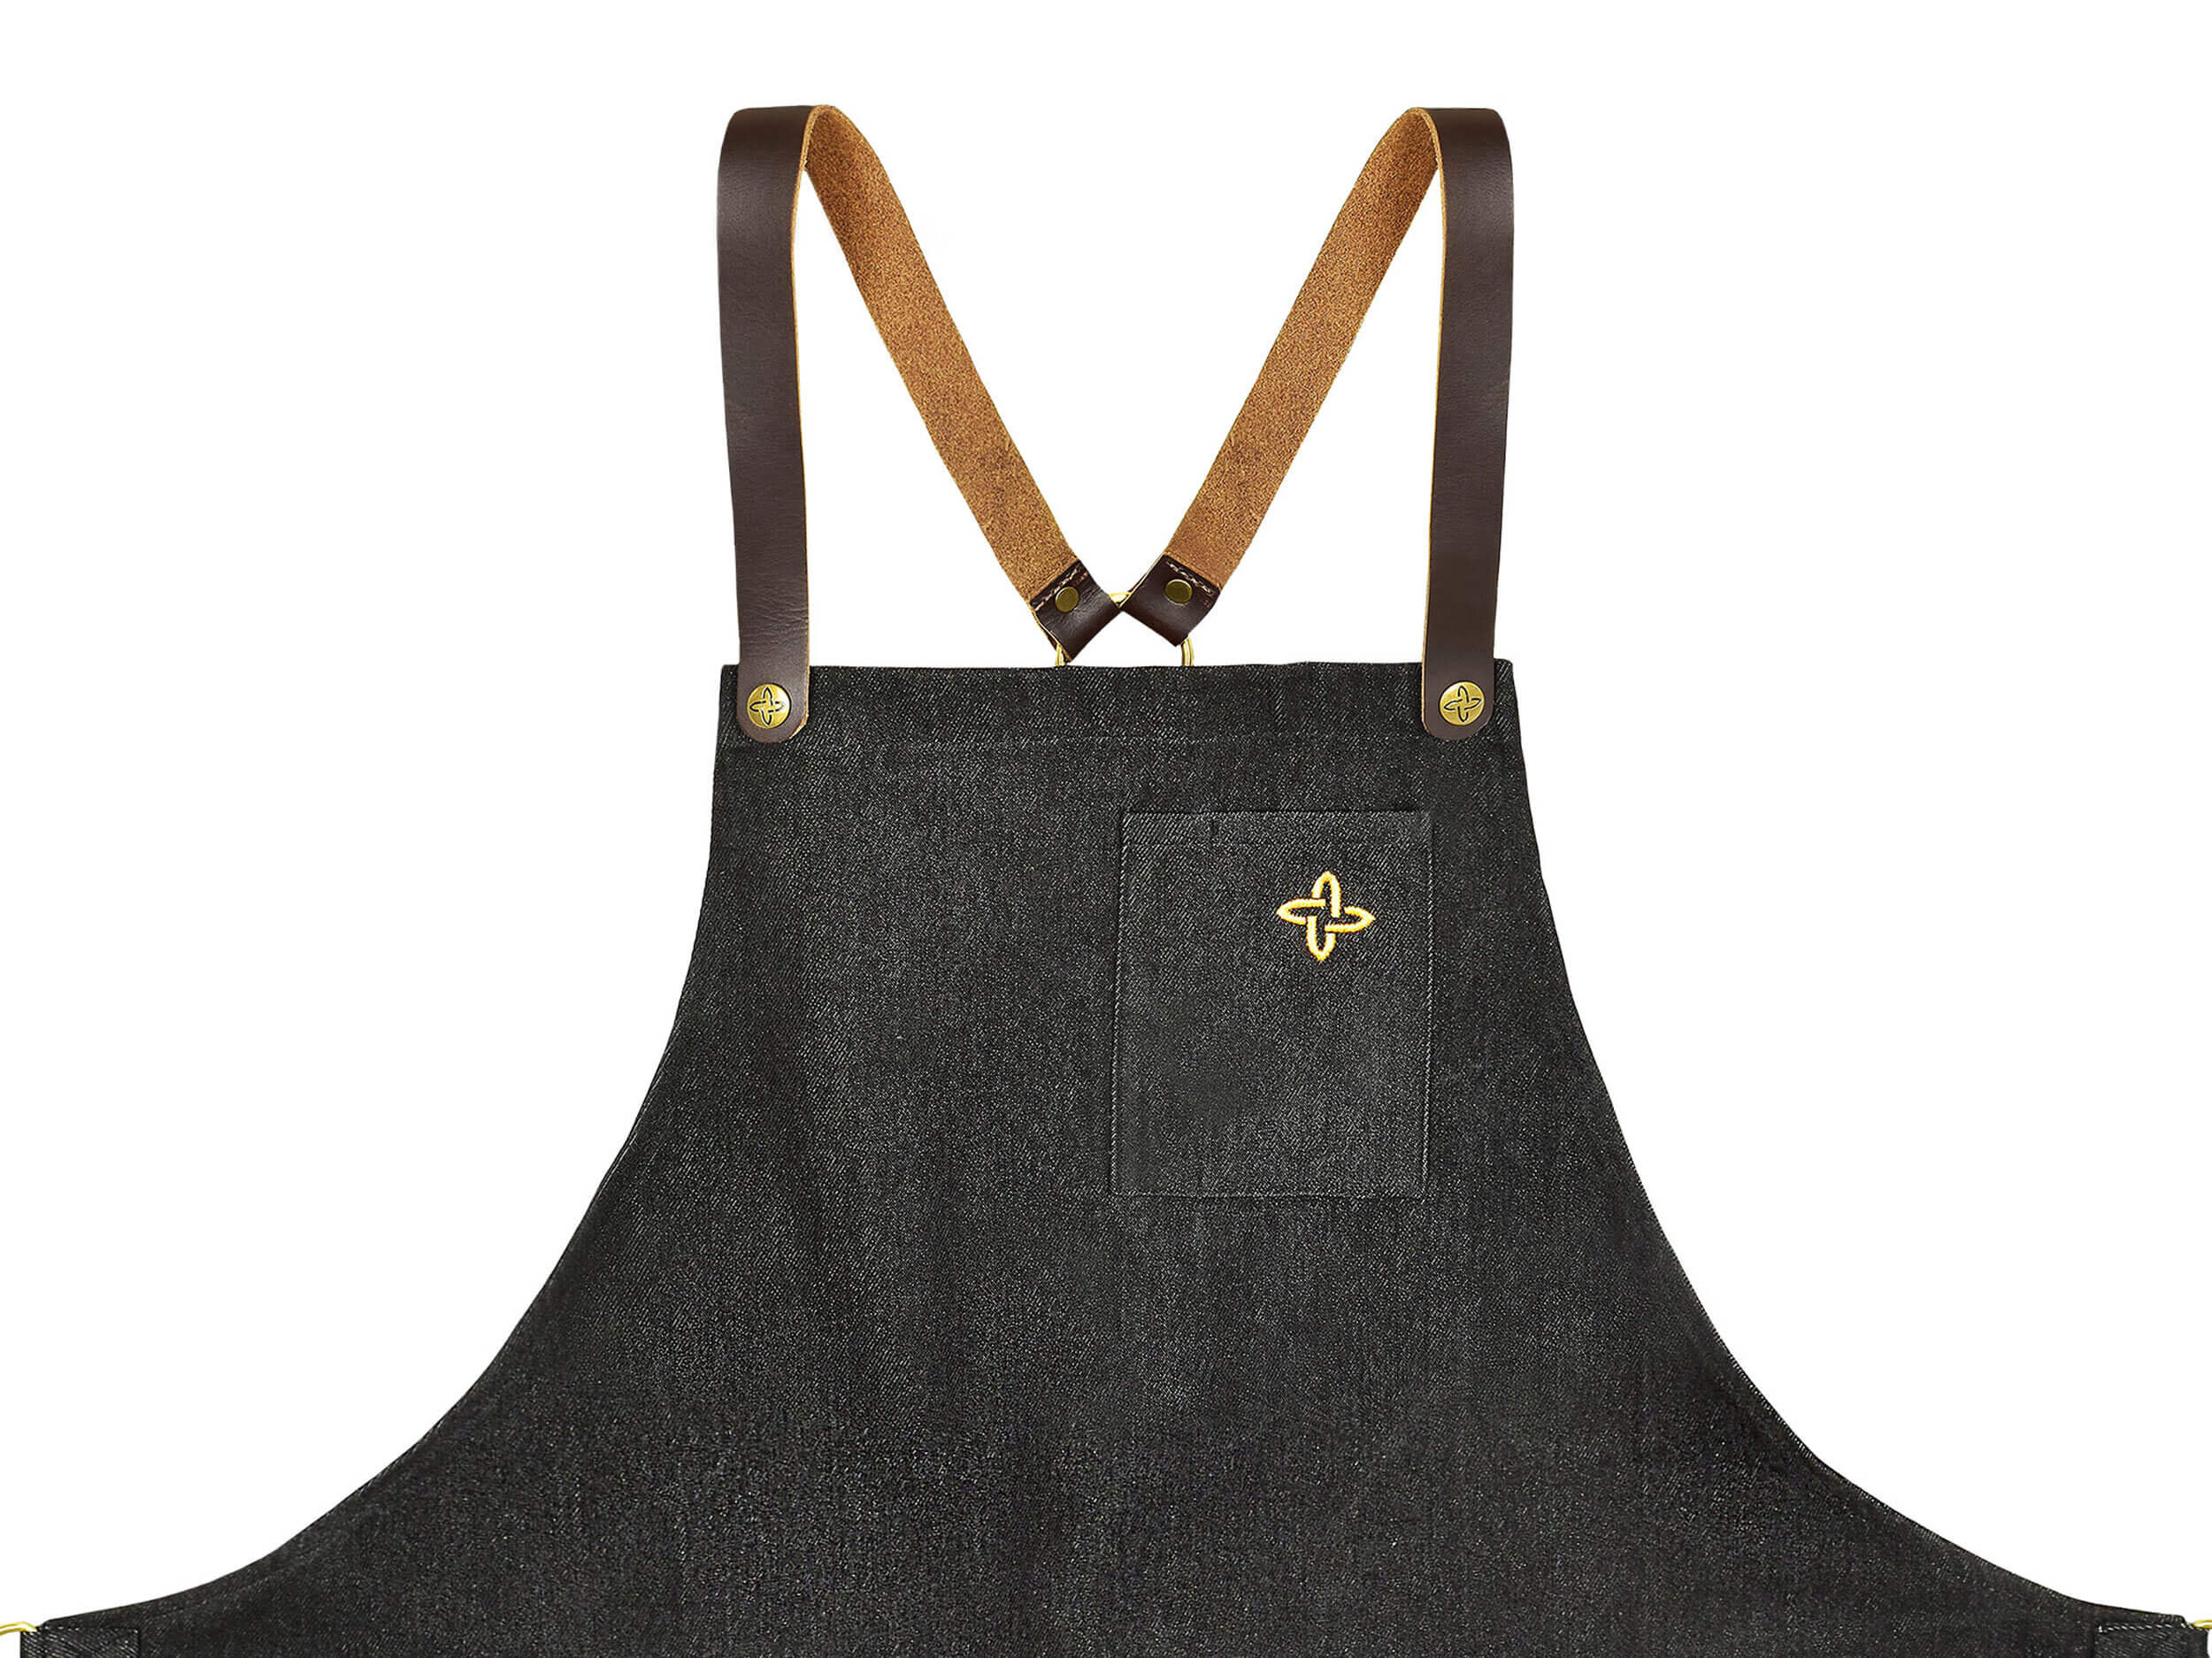 Denim bib apron leather strap barista bartender barbecue chef work uniform  | eBay